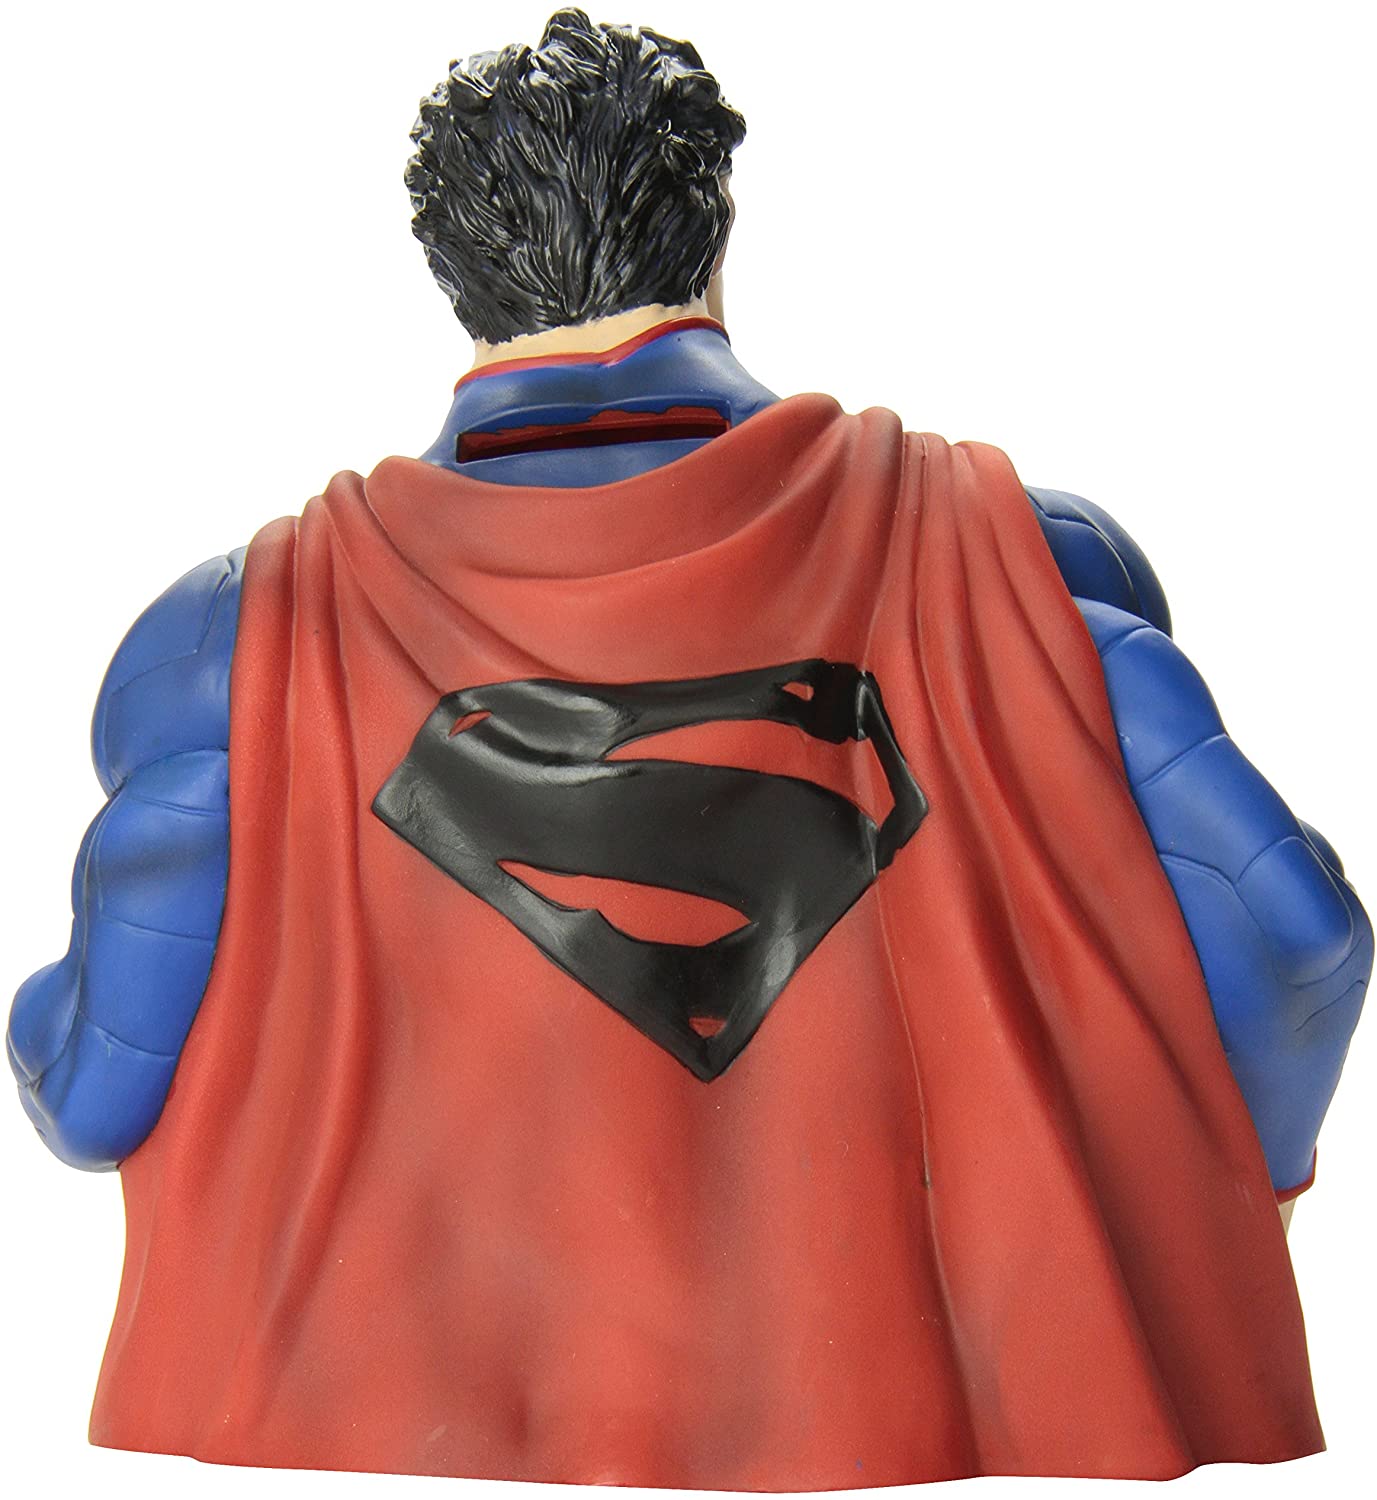 Superman Figure Bust Bank - GTE Zone